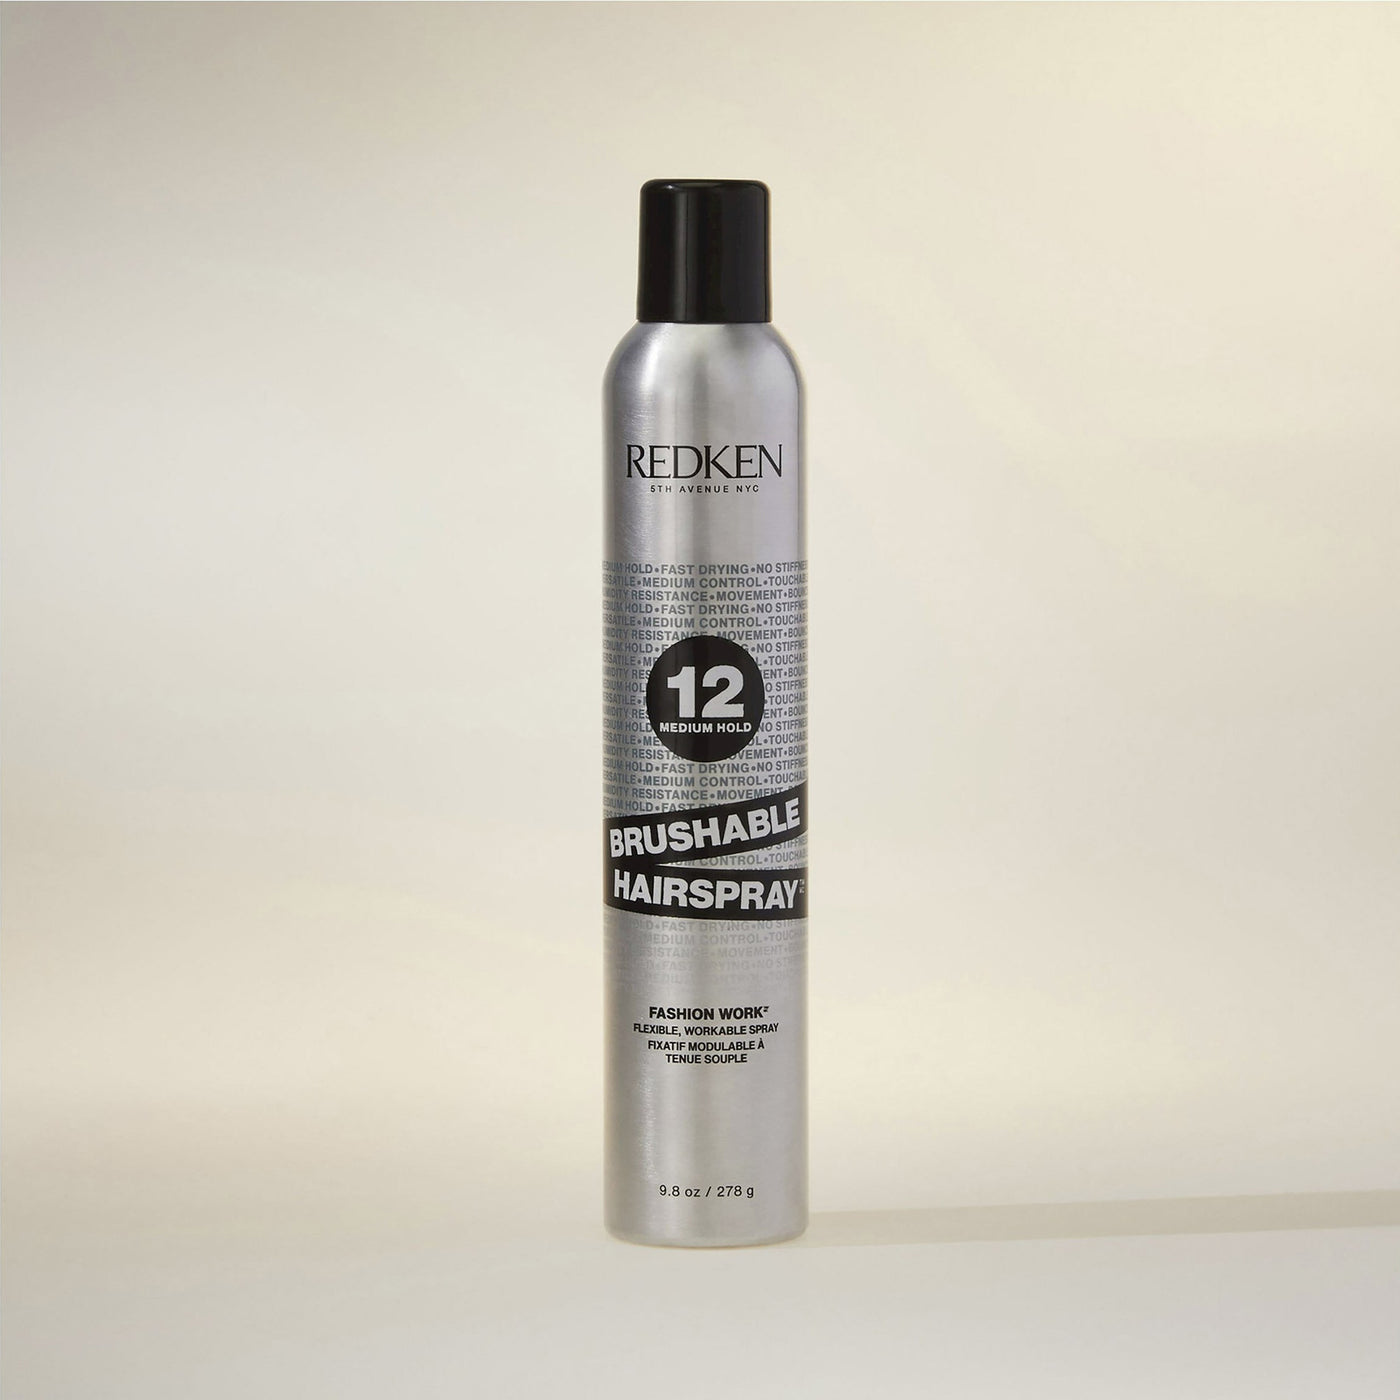 Redken Brushable Hairspray (290g) styled